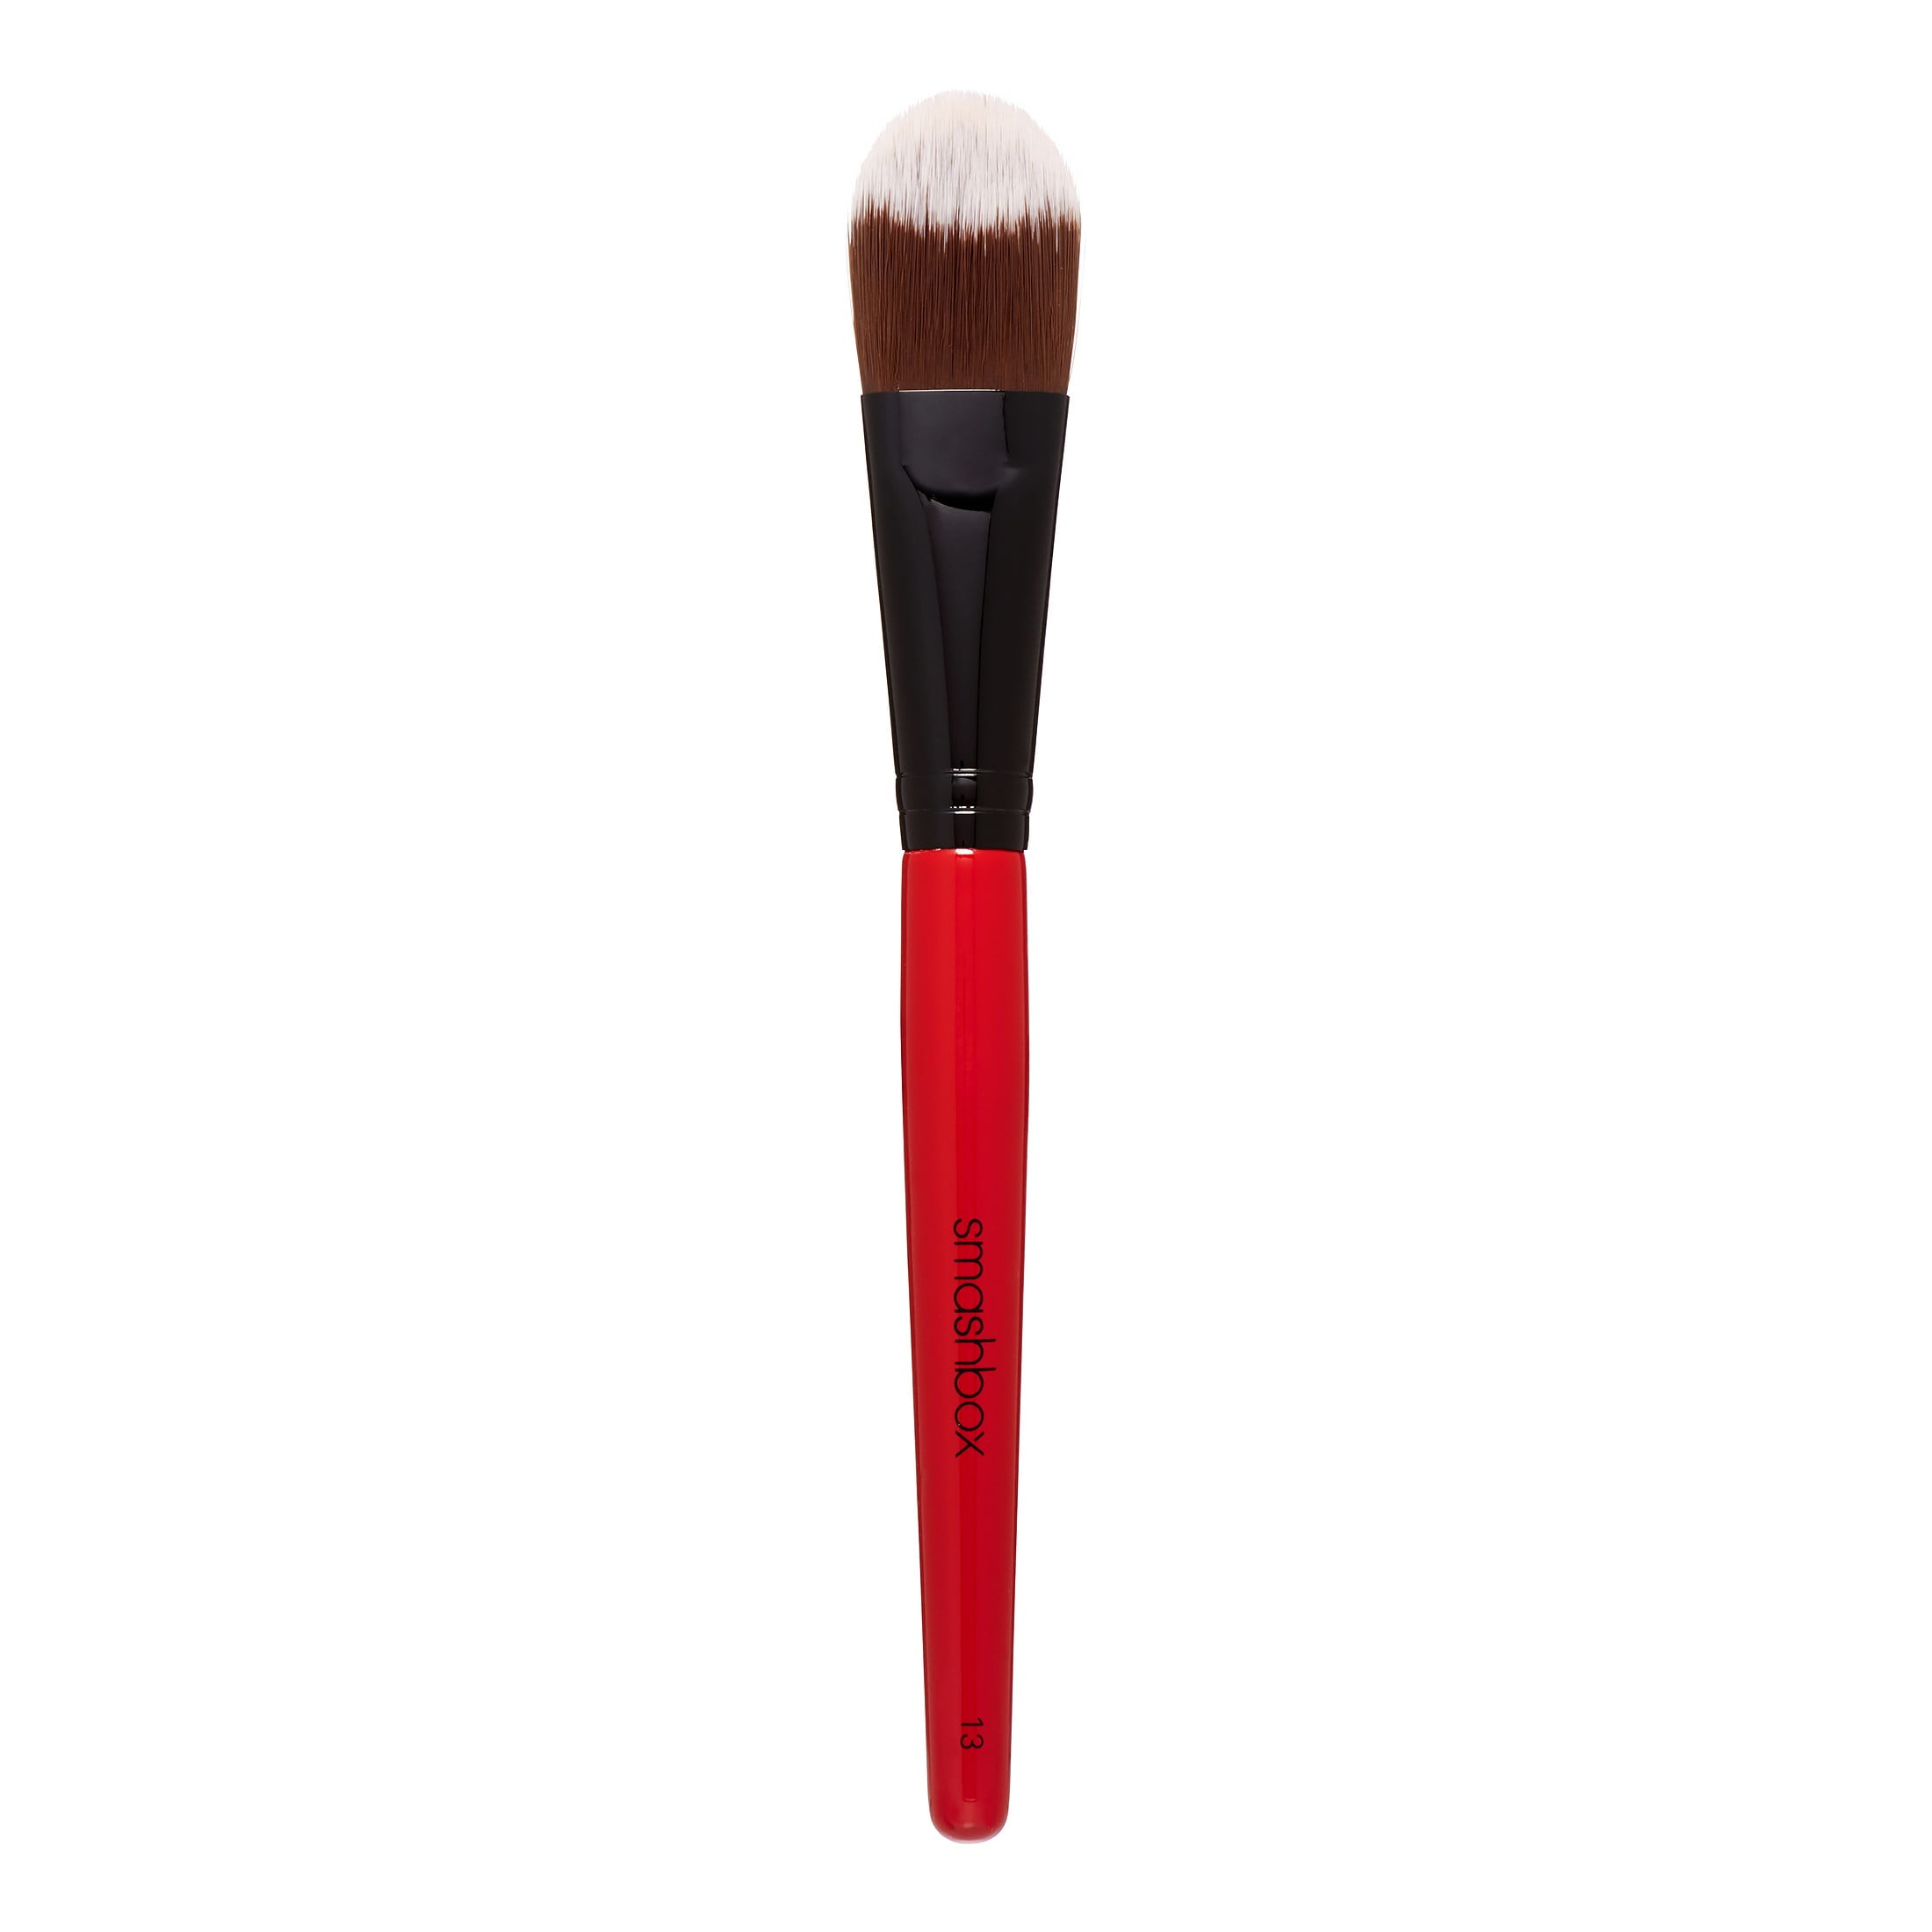 Smashbox Makeup Brushes: Foundation #13 $9.91, Eye Shadow Definer $6.48 & More + Free S&H w/ Walmart+ or $35+